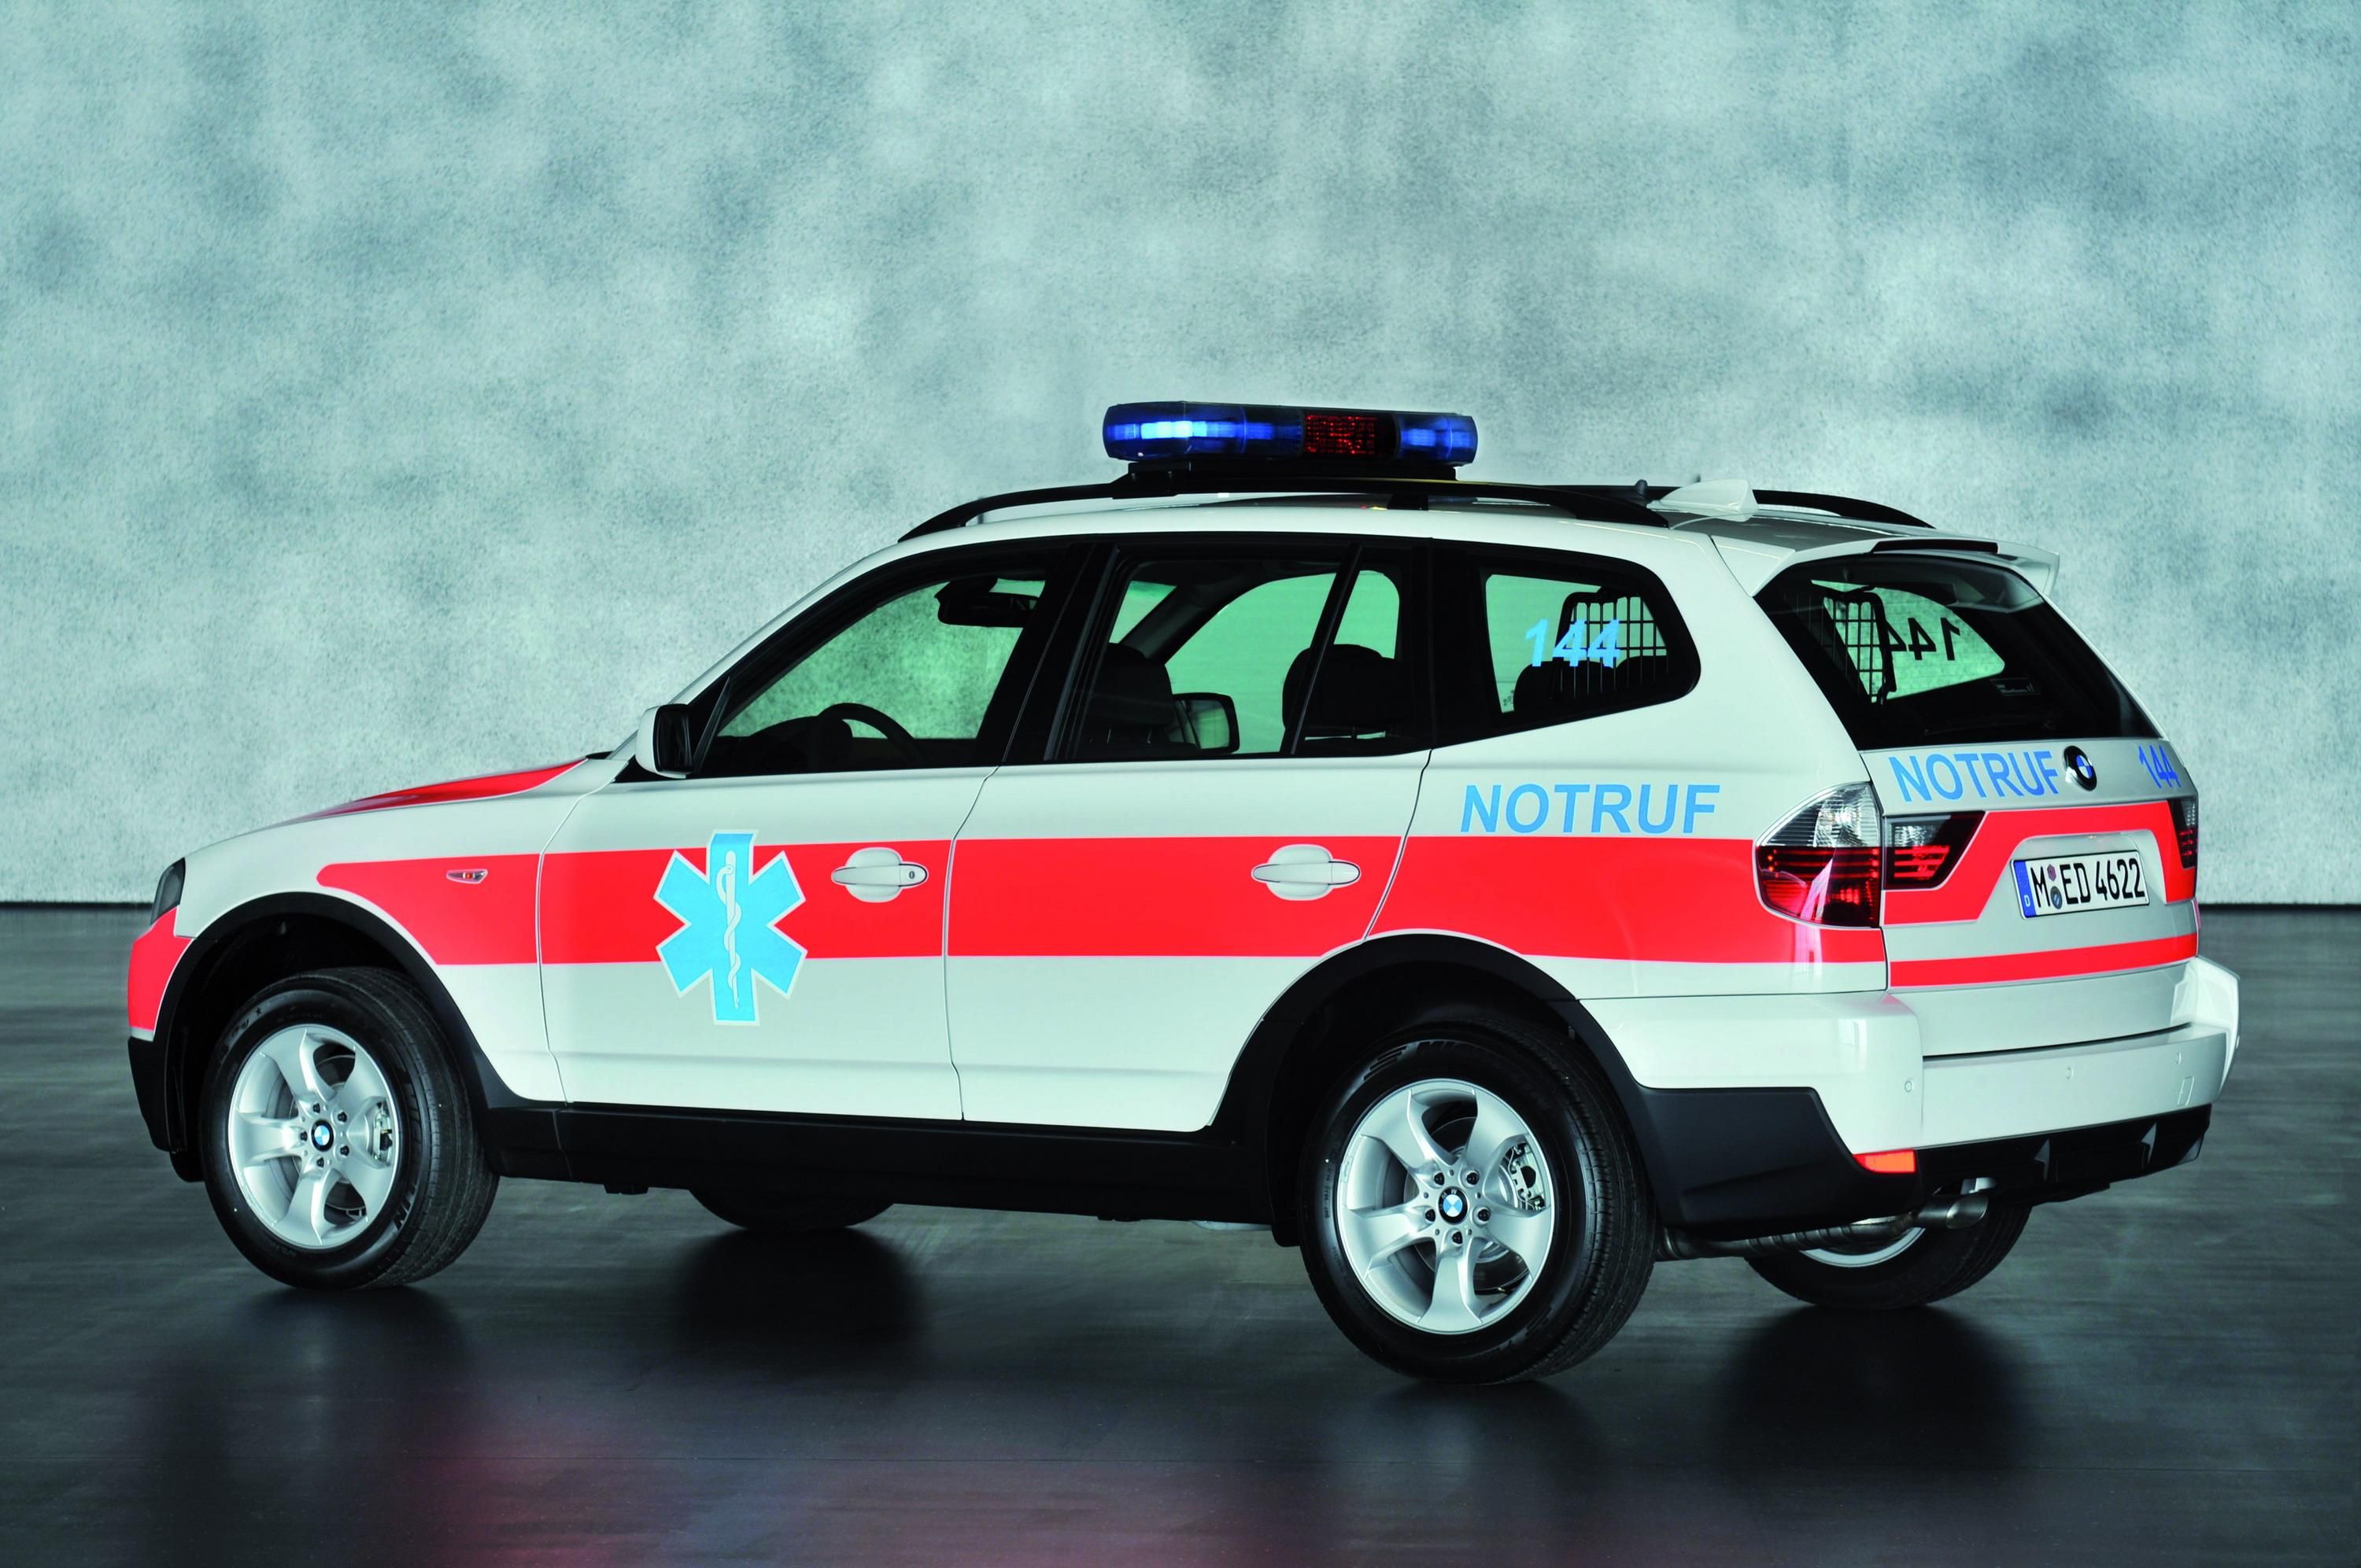 2009 BMW X3 Rescue Vehicle